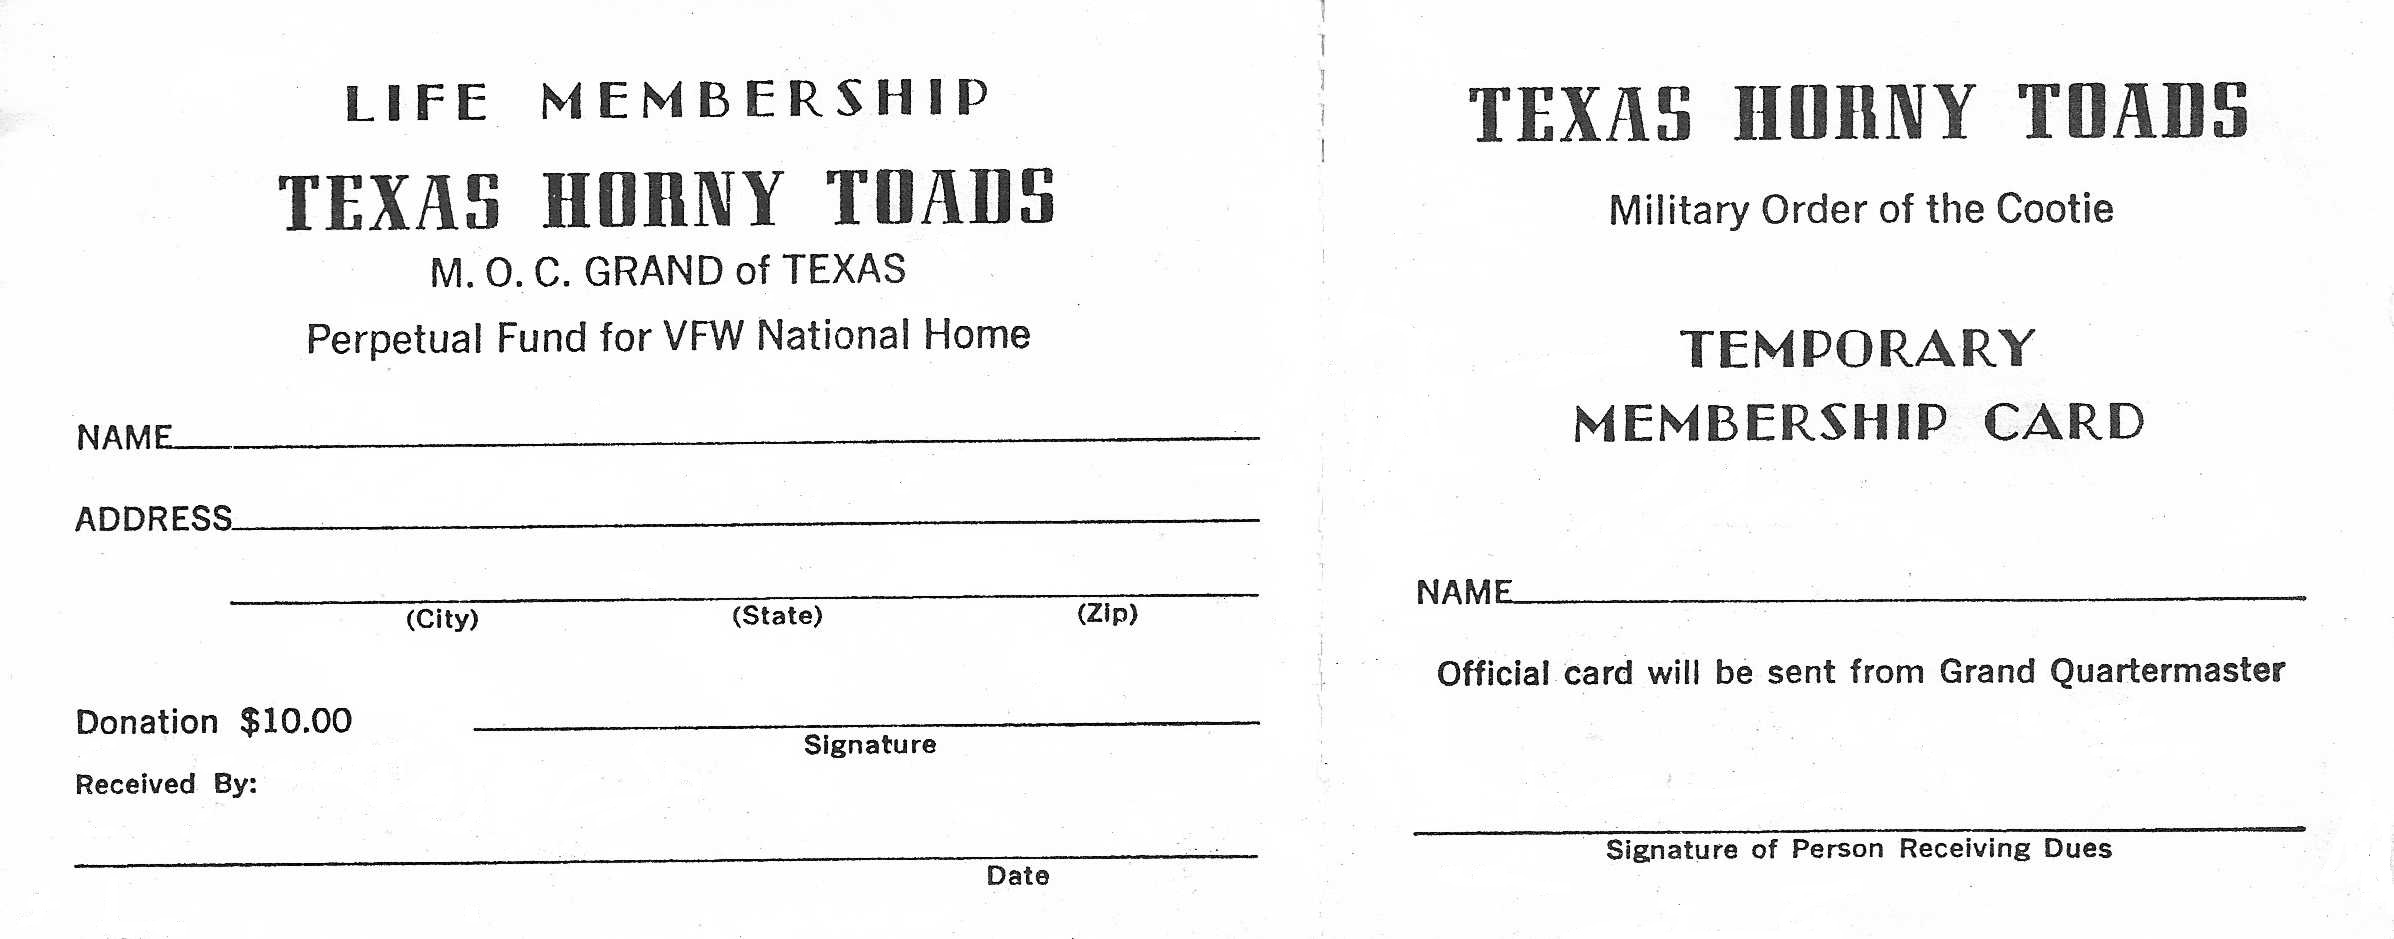 Horny Toad Life Membership Application